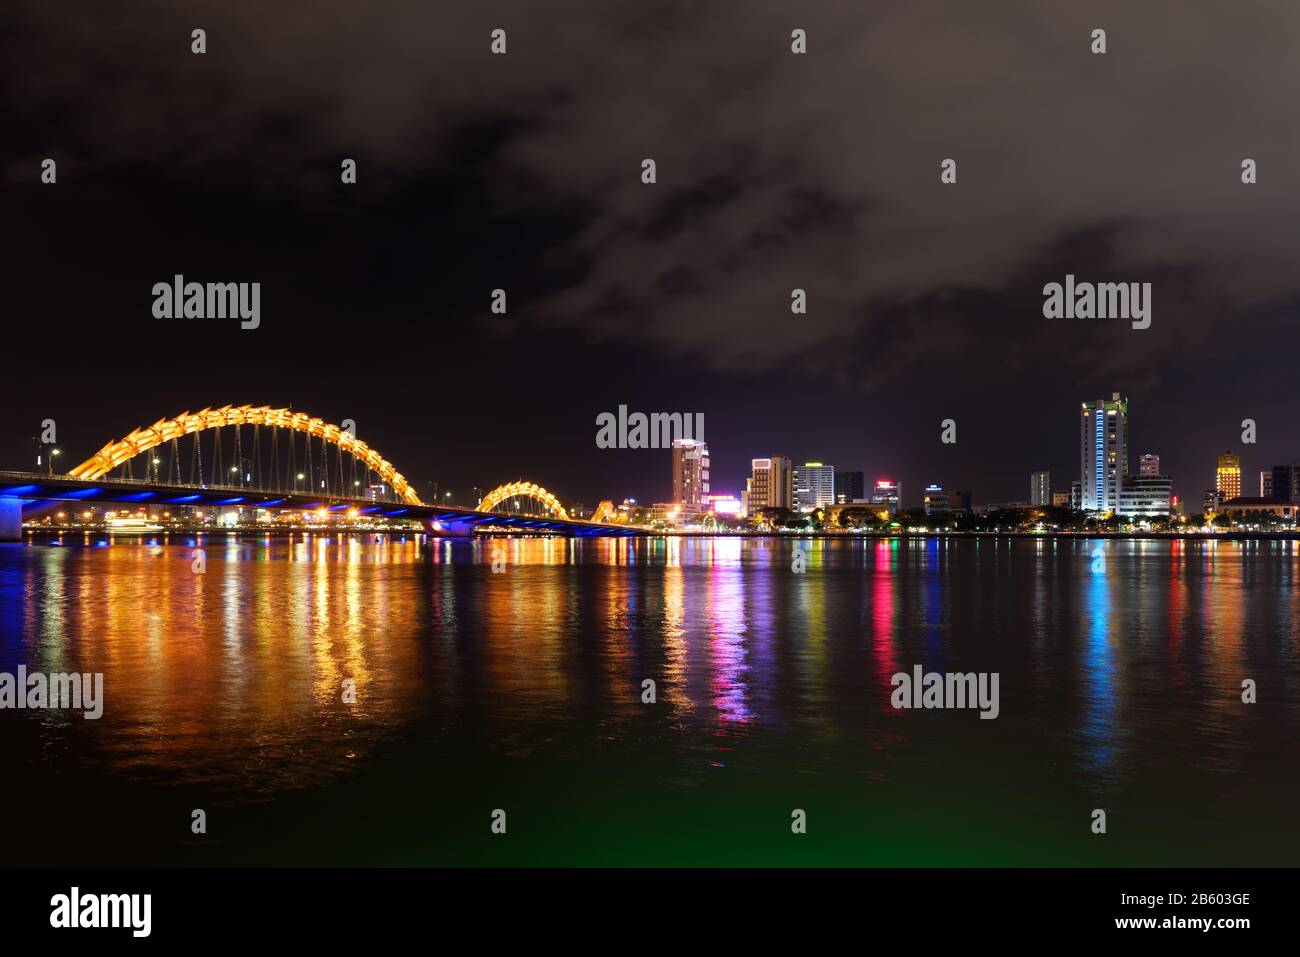 Night scene of Han river, illuminated Dragon bridge and buildings in DaNang city, Vietnam Stock Photo